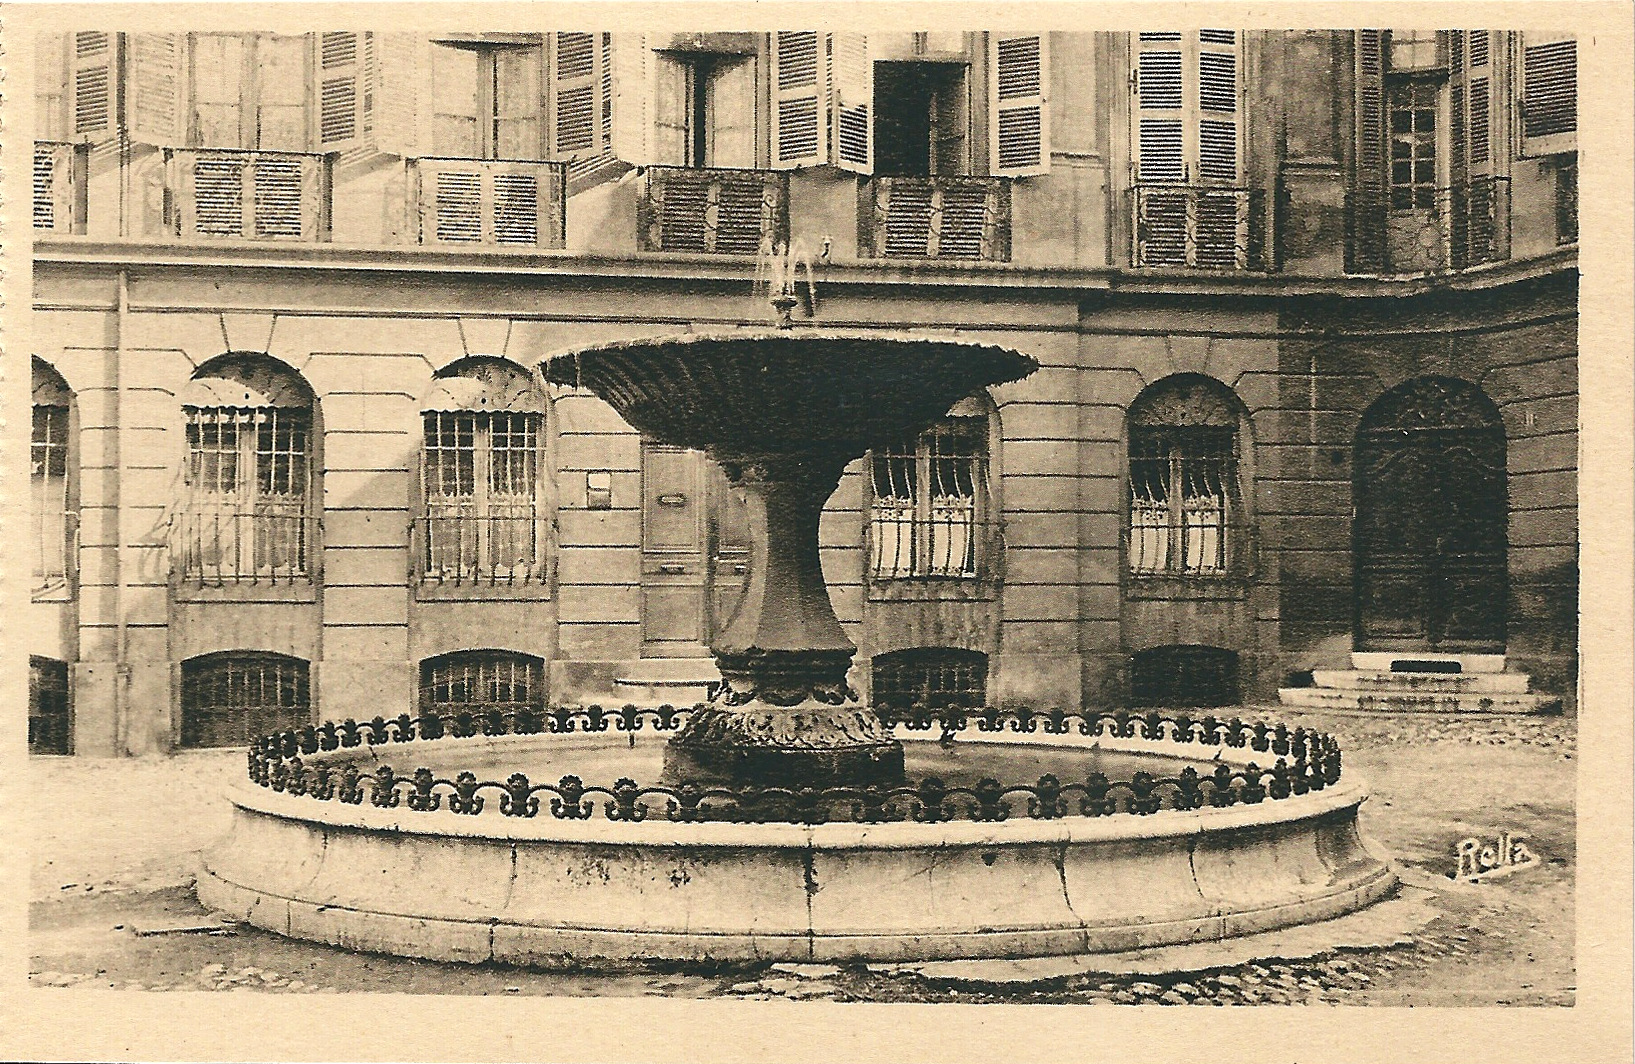 Place d'Albertas in 1932 (Public Domain via Wikimedia Commons)